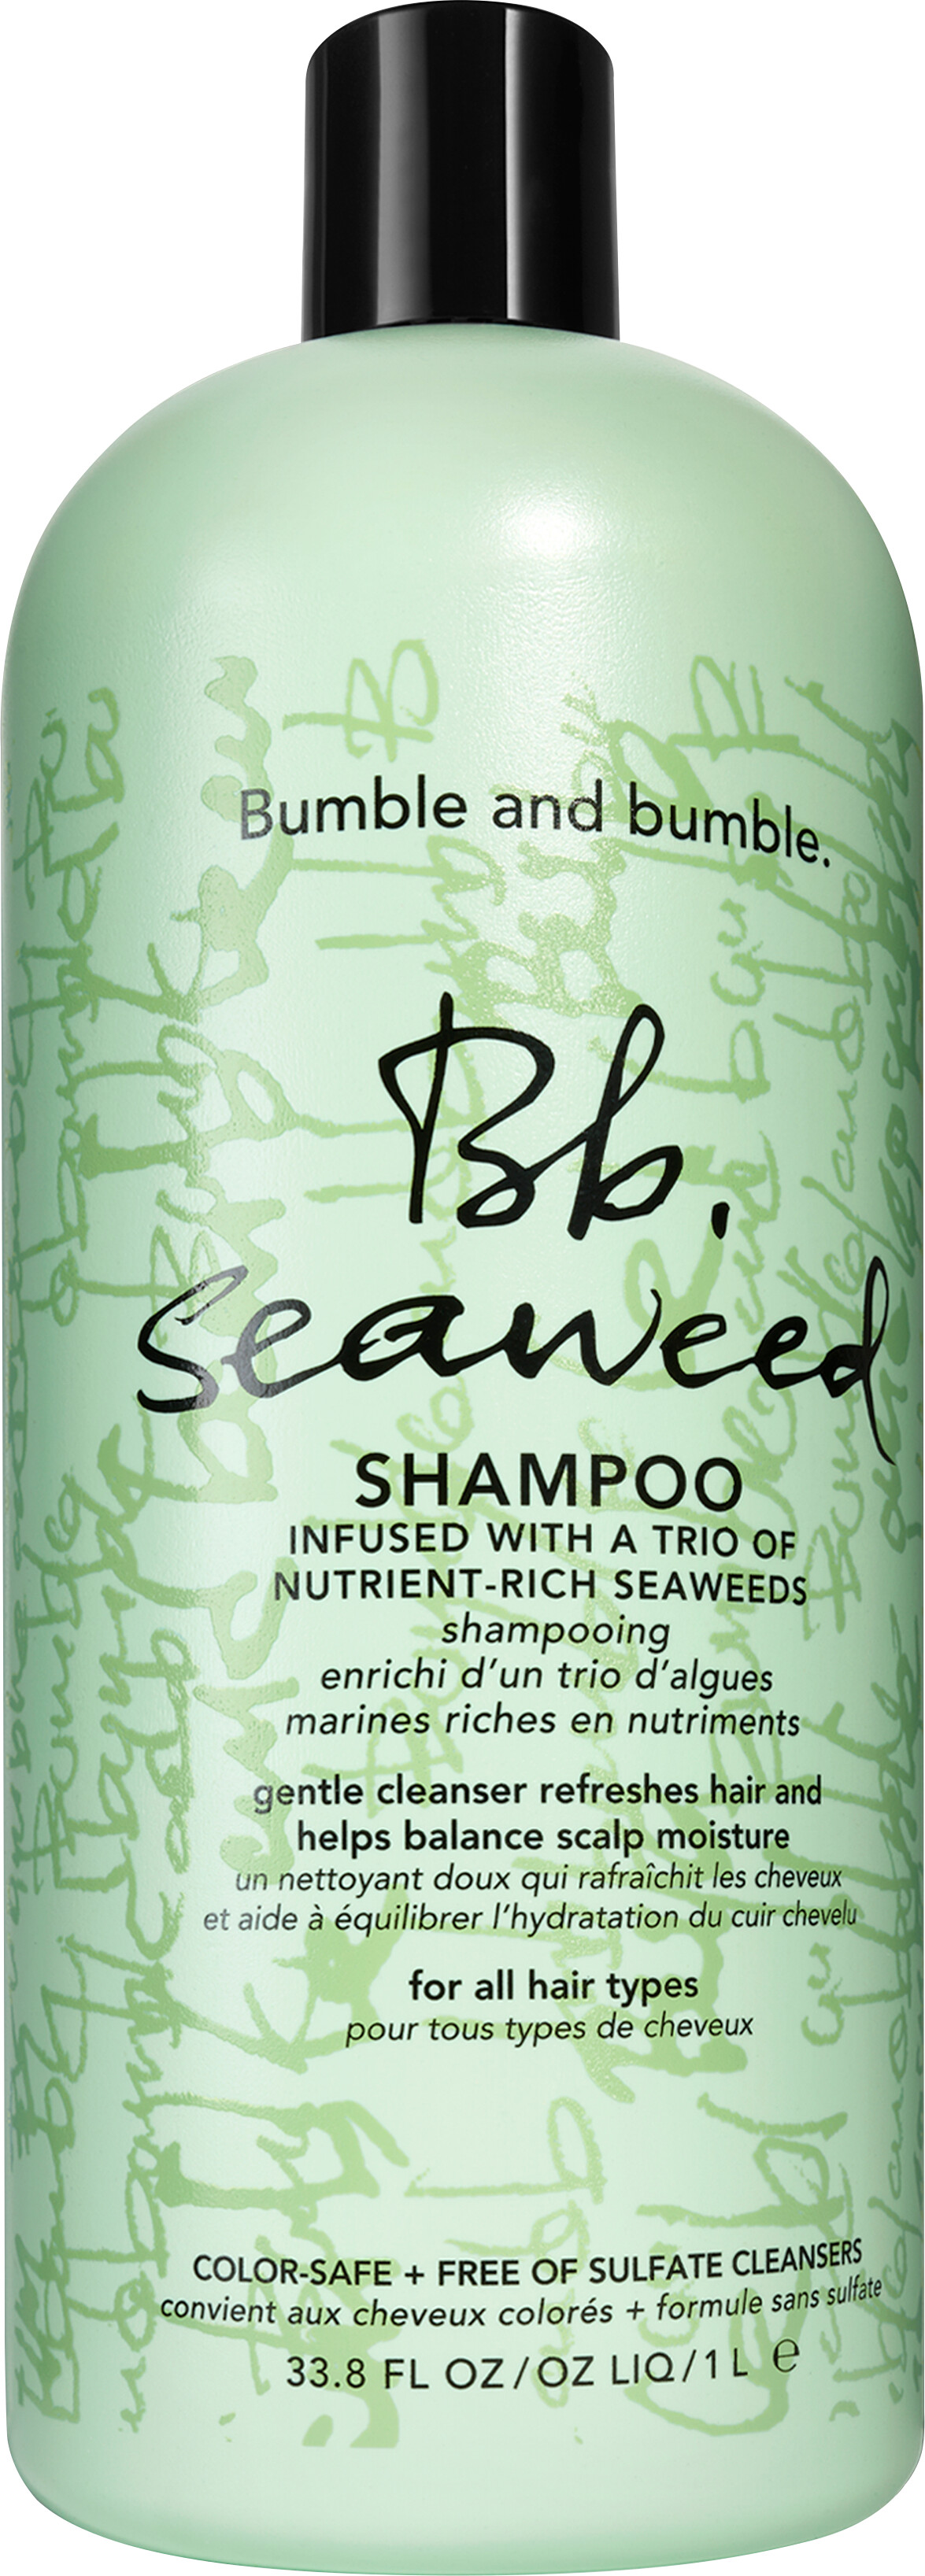 Bumble and bumble Seaweed Shampoo 1 litre